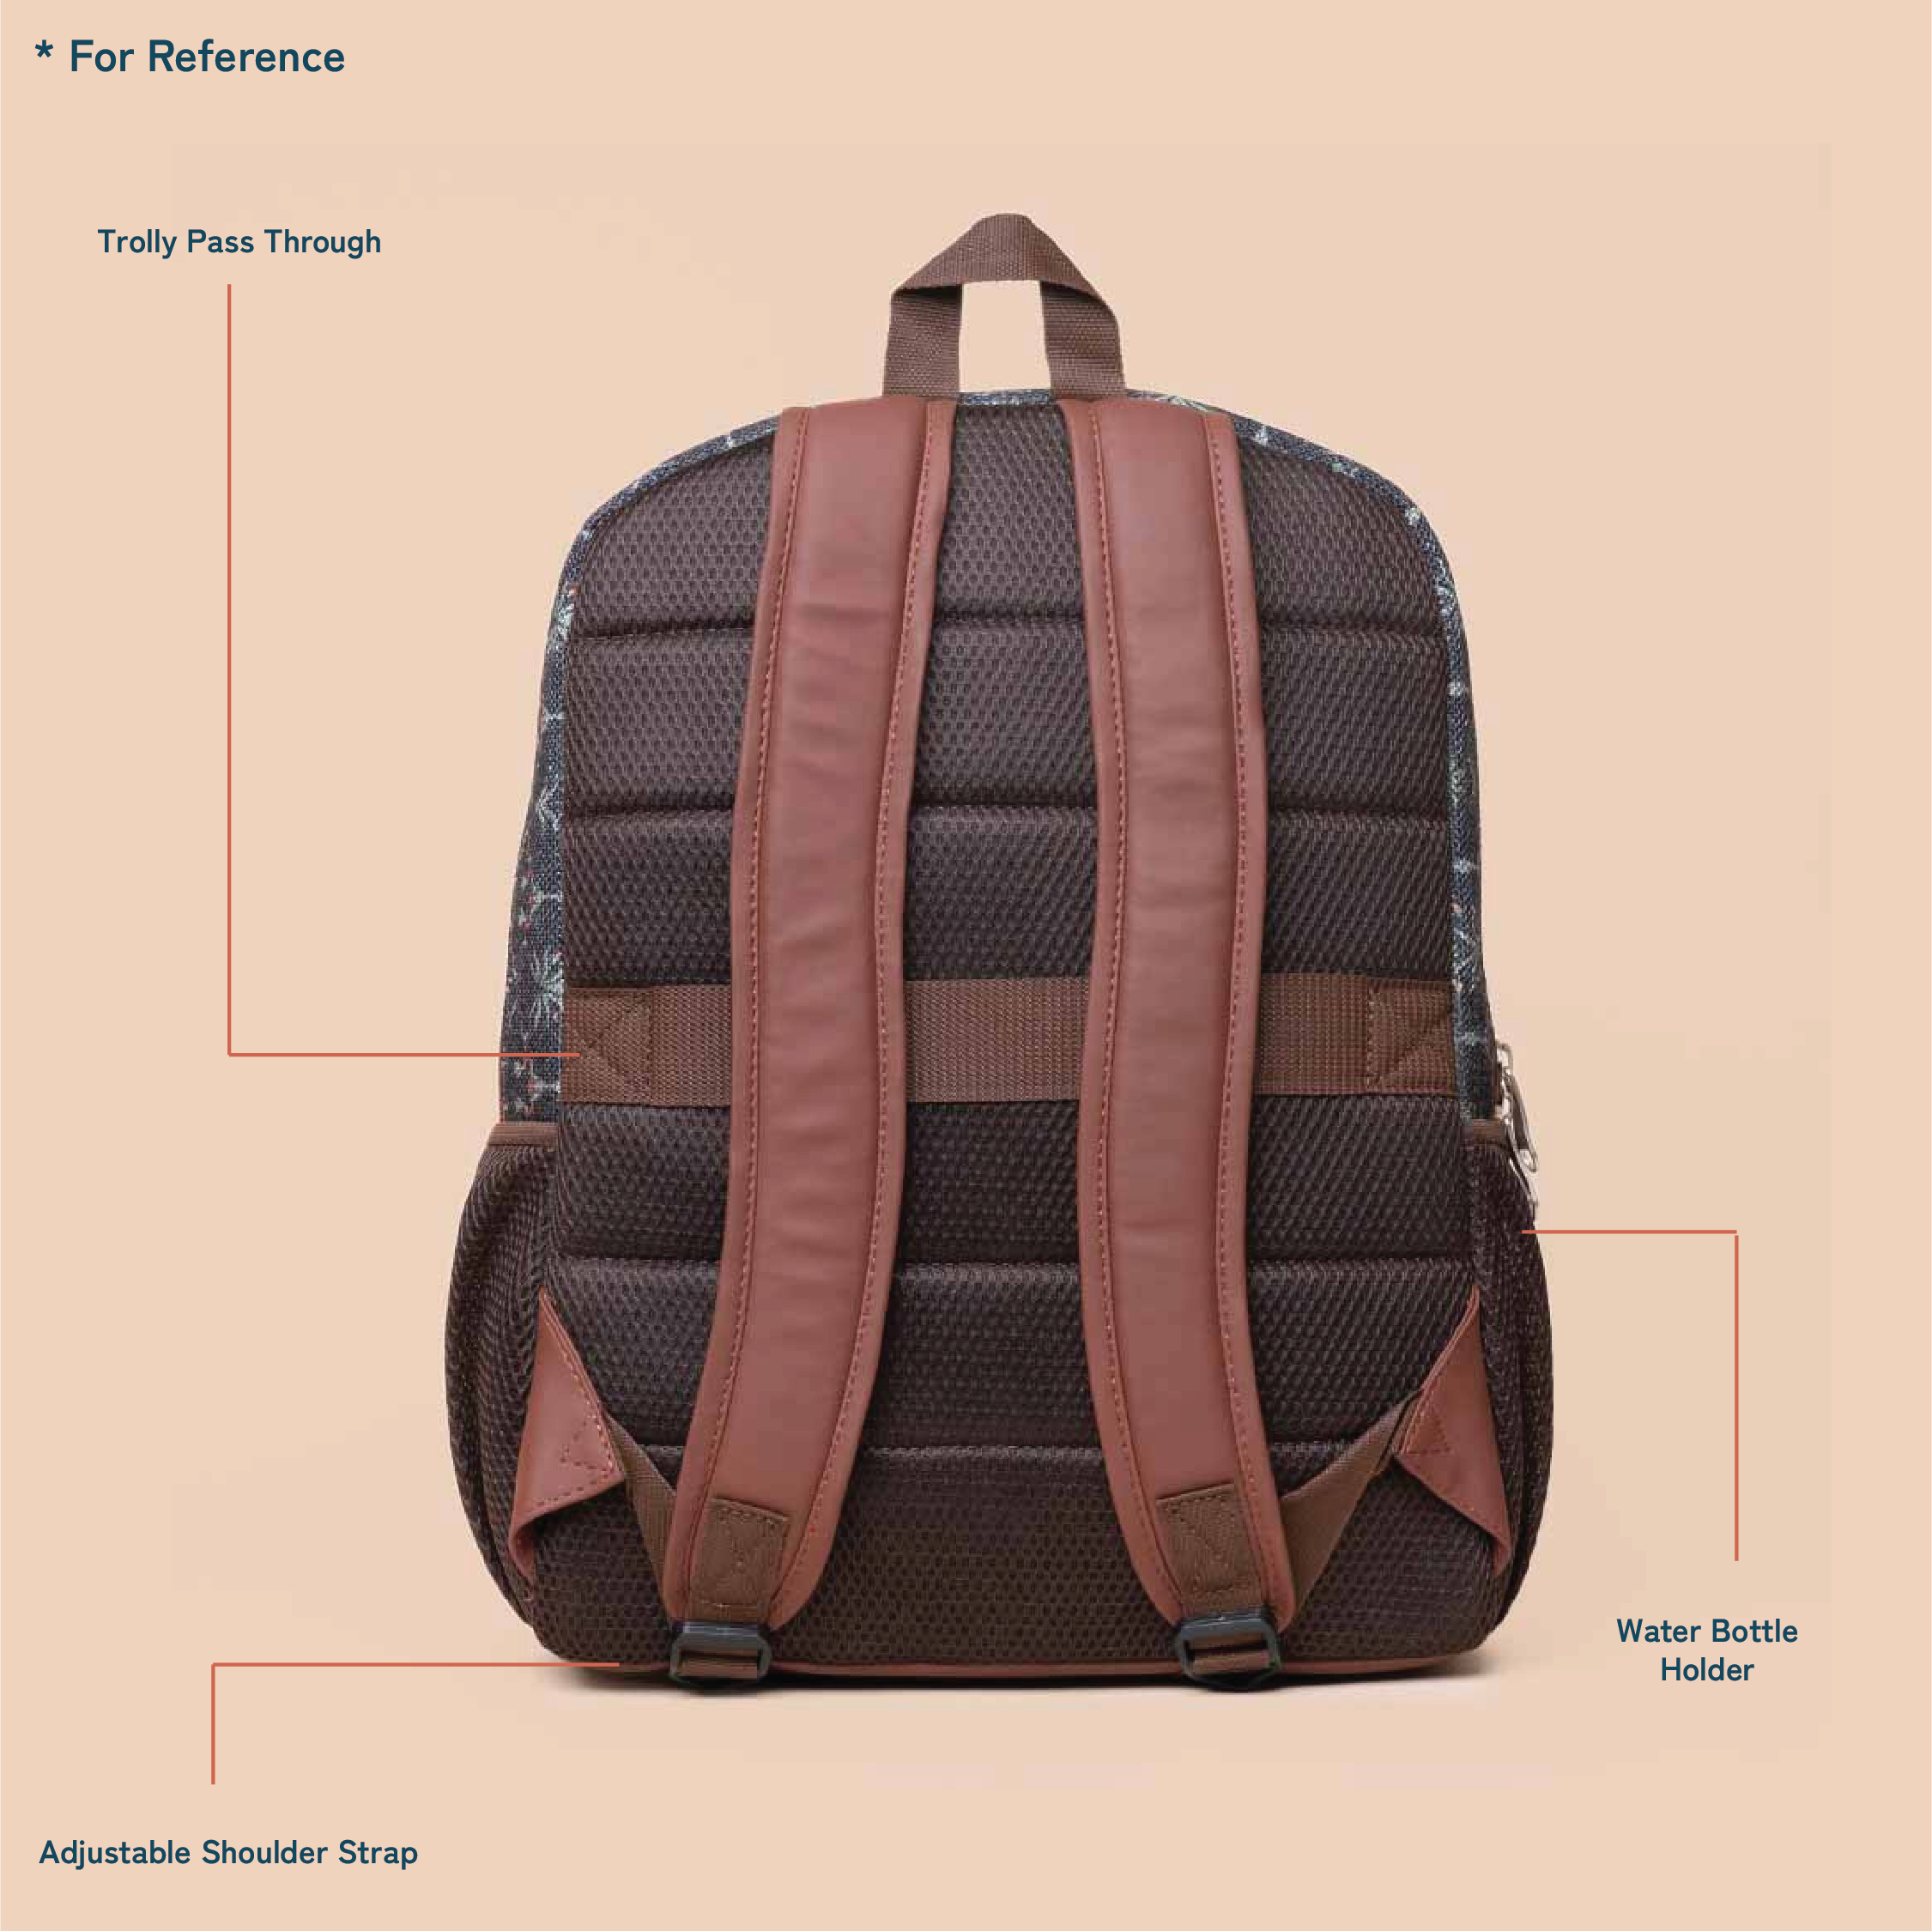 FloLov Classic Backpack